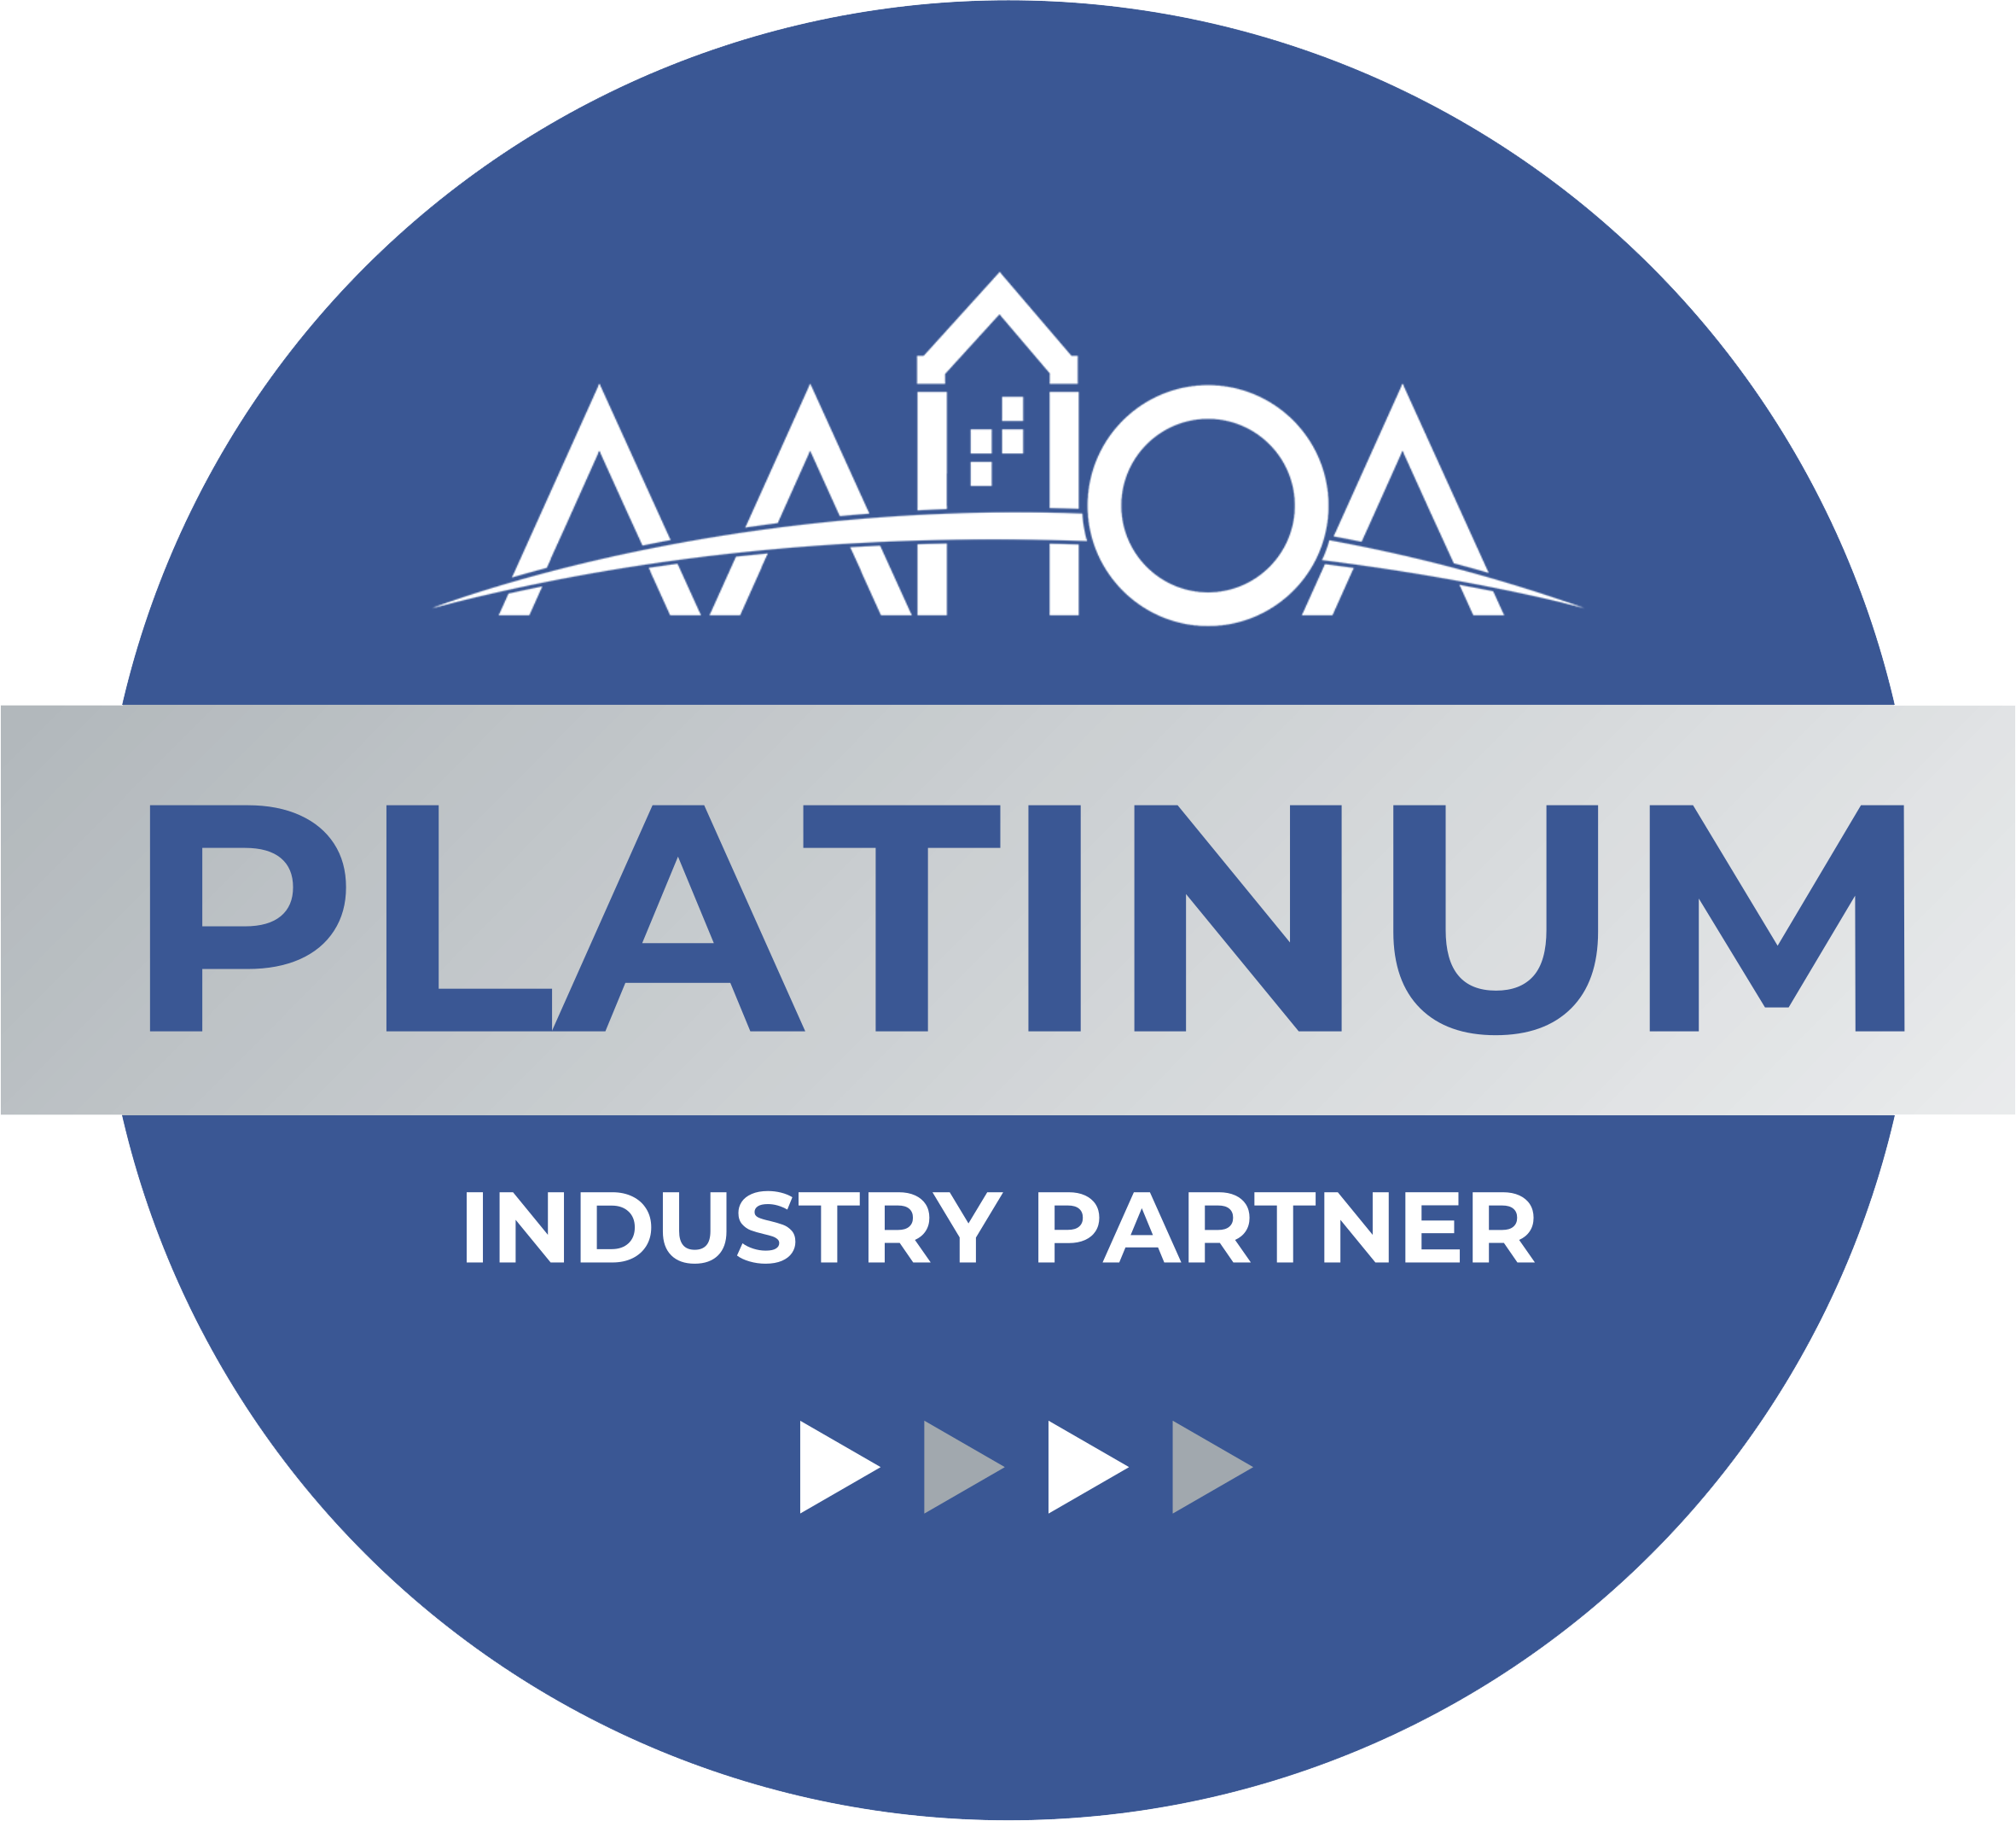 AAHOA-Platinum-Seal-Blue